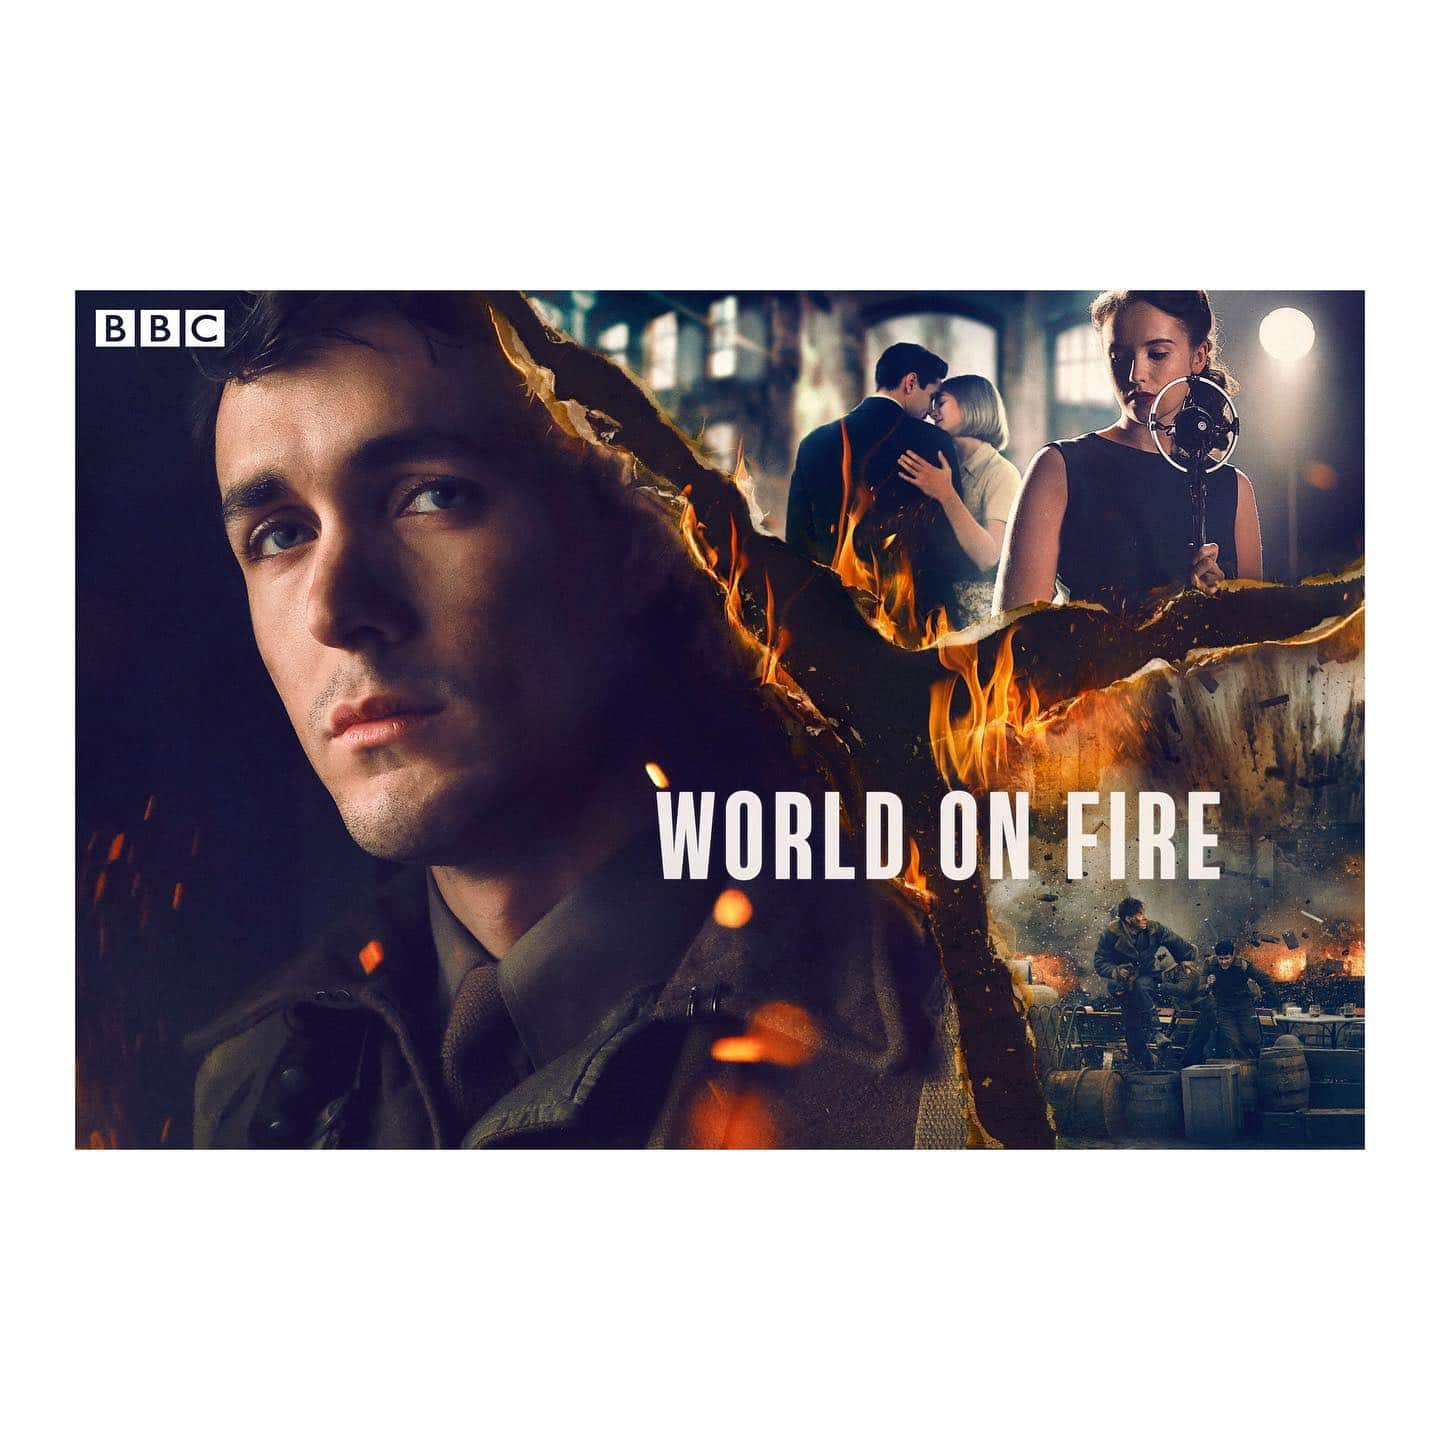 @worldonfiretv tomorrow night at 9pm on @bbcone starring @jonahhauerking @blakeharrisonreal and Lesley Manville 
.
.
.
.
.
@mammothscreen @bbc @